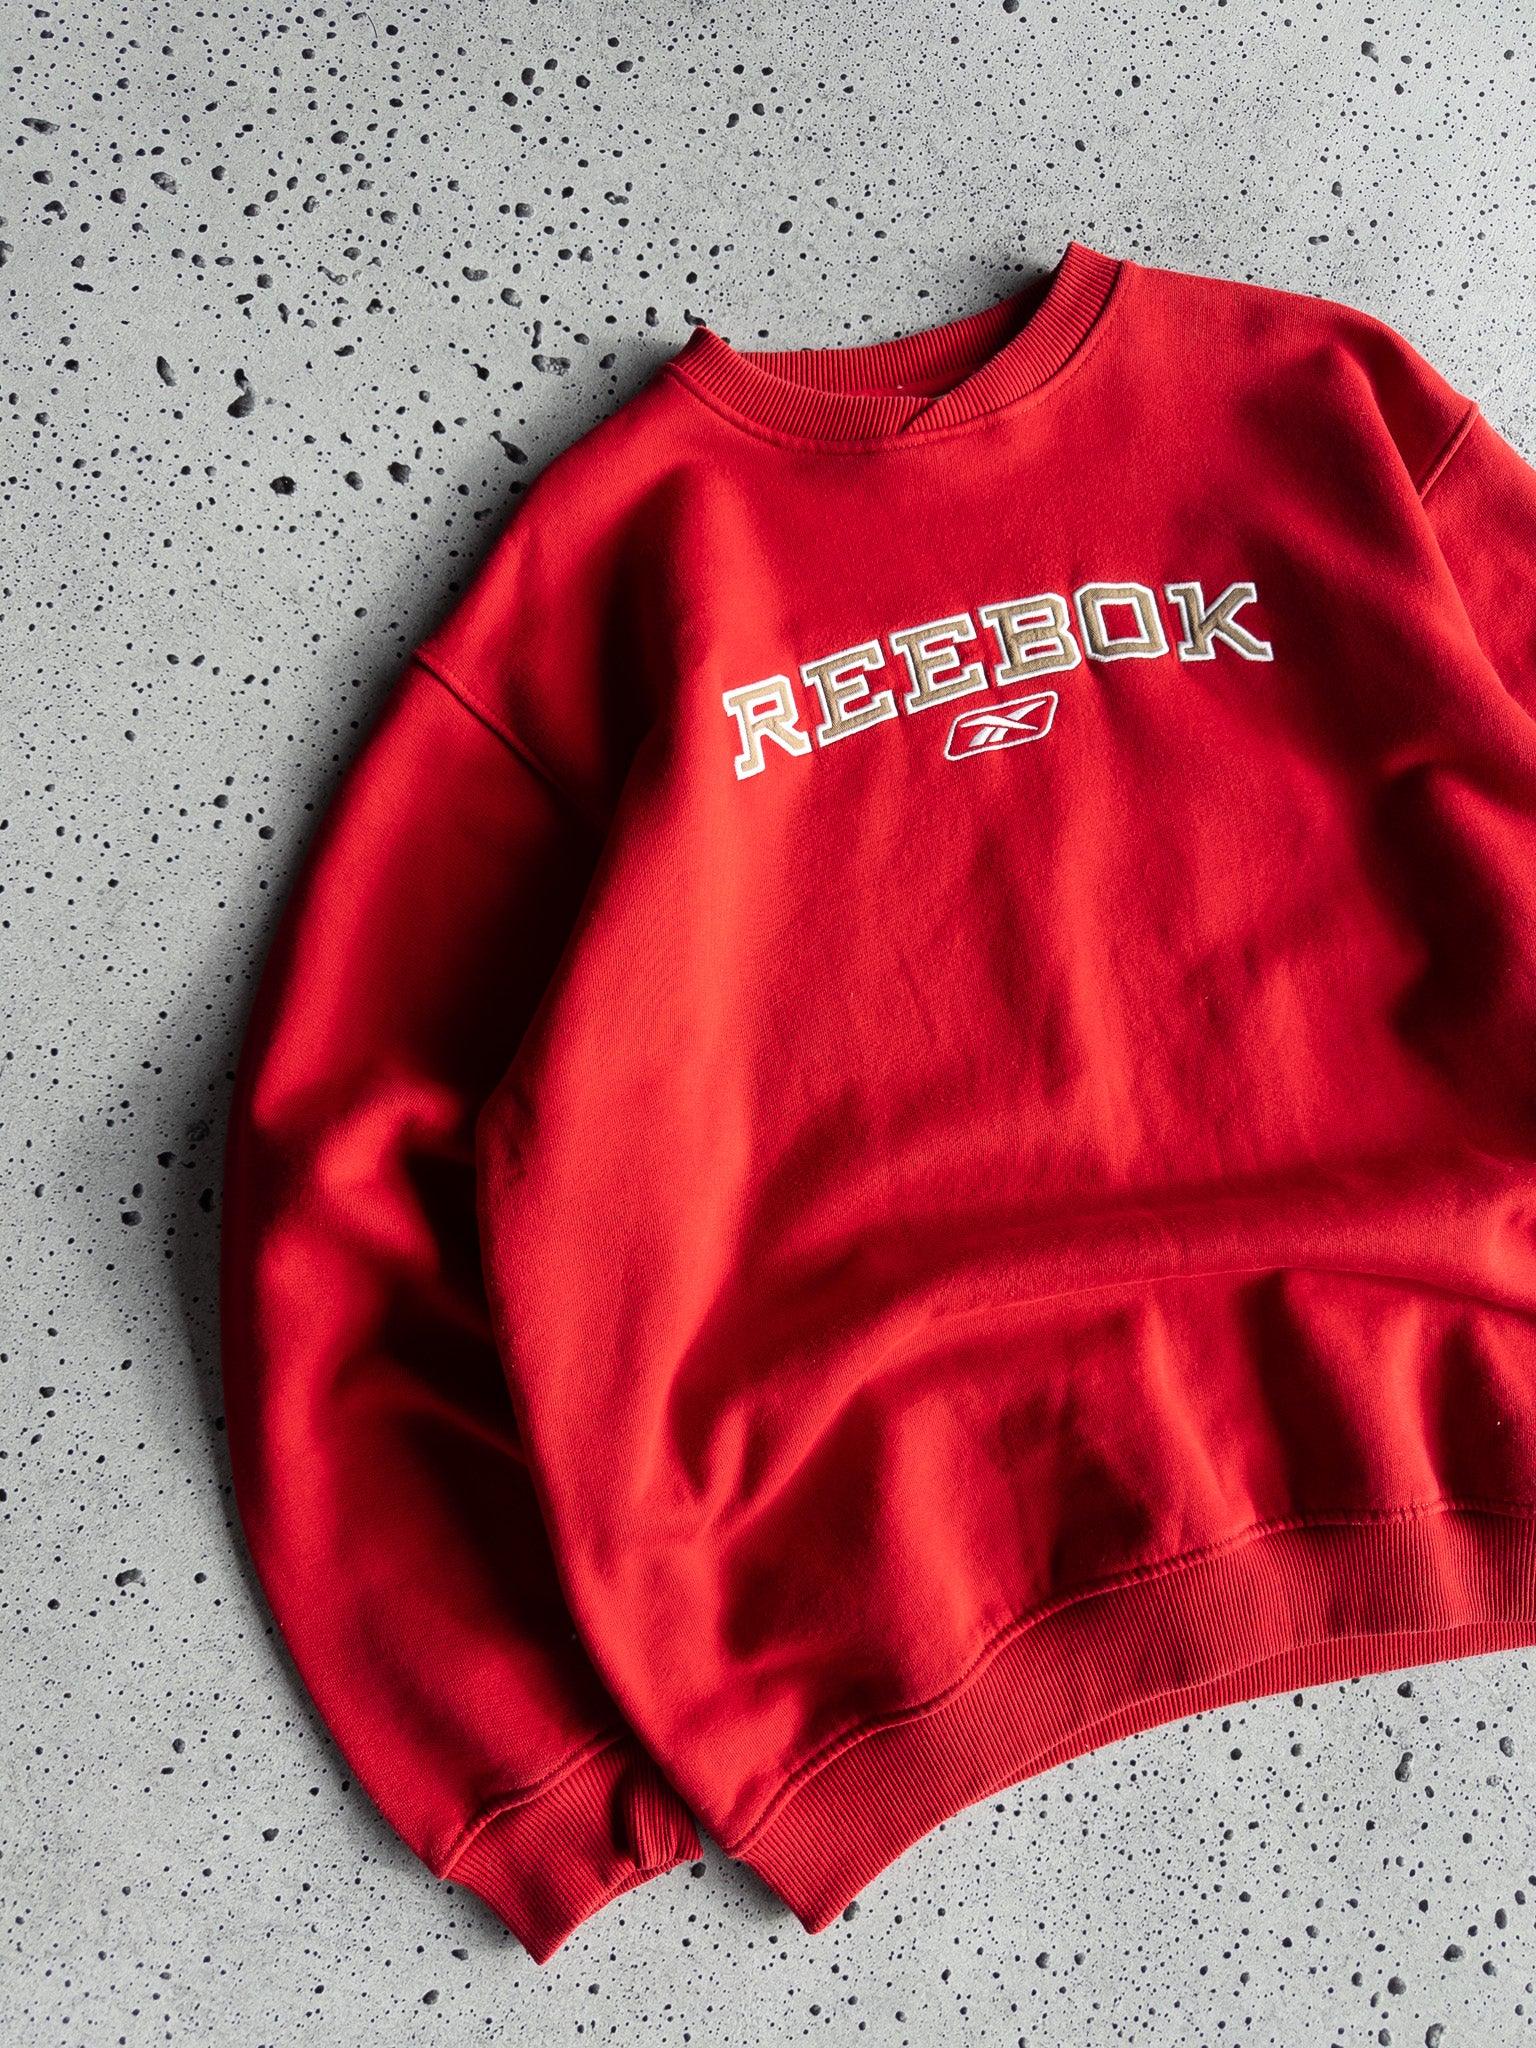 Vintage Reebok Sweatshirt (L) - Planet Vintage Store